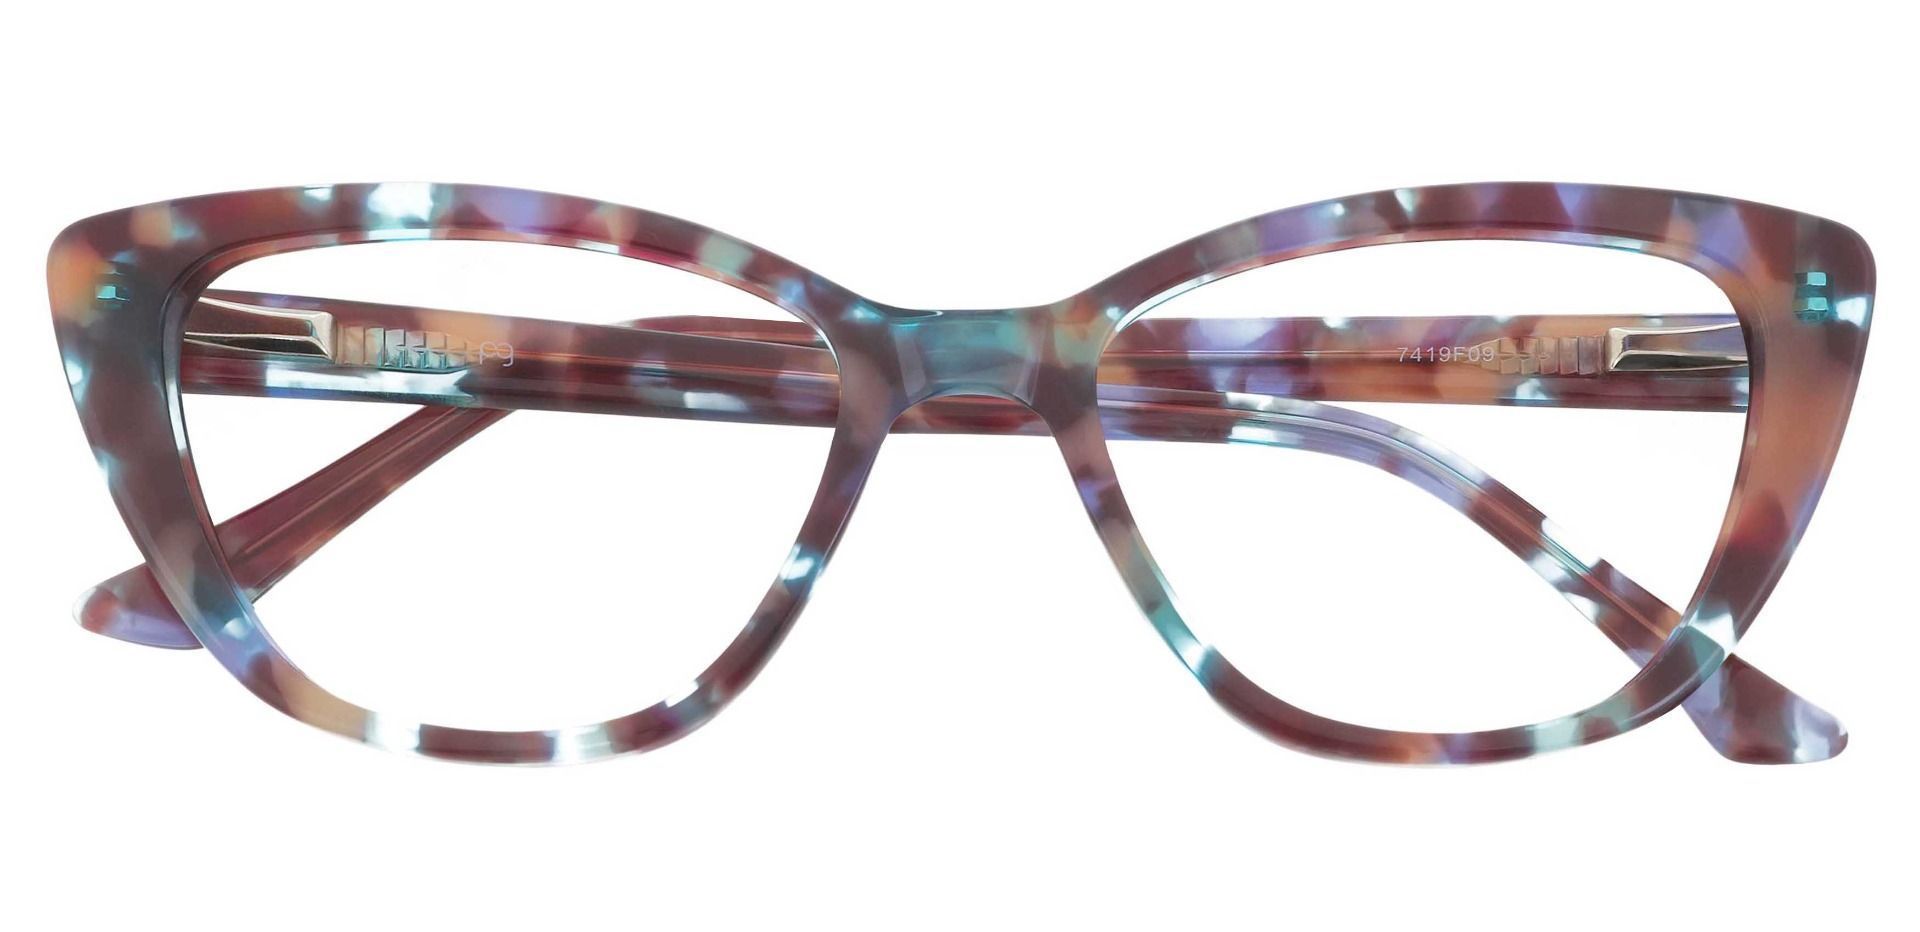 Athena Cat-Eye Prescription Glasses - Floral